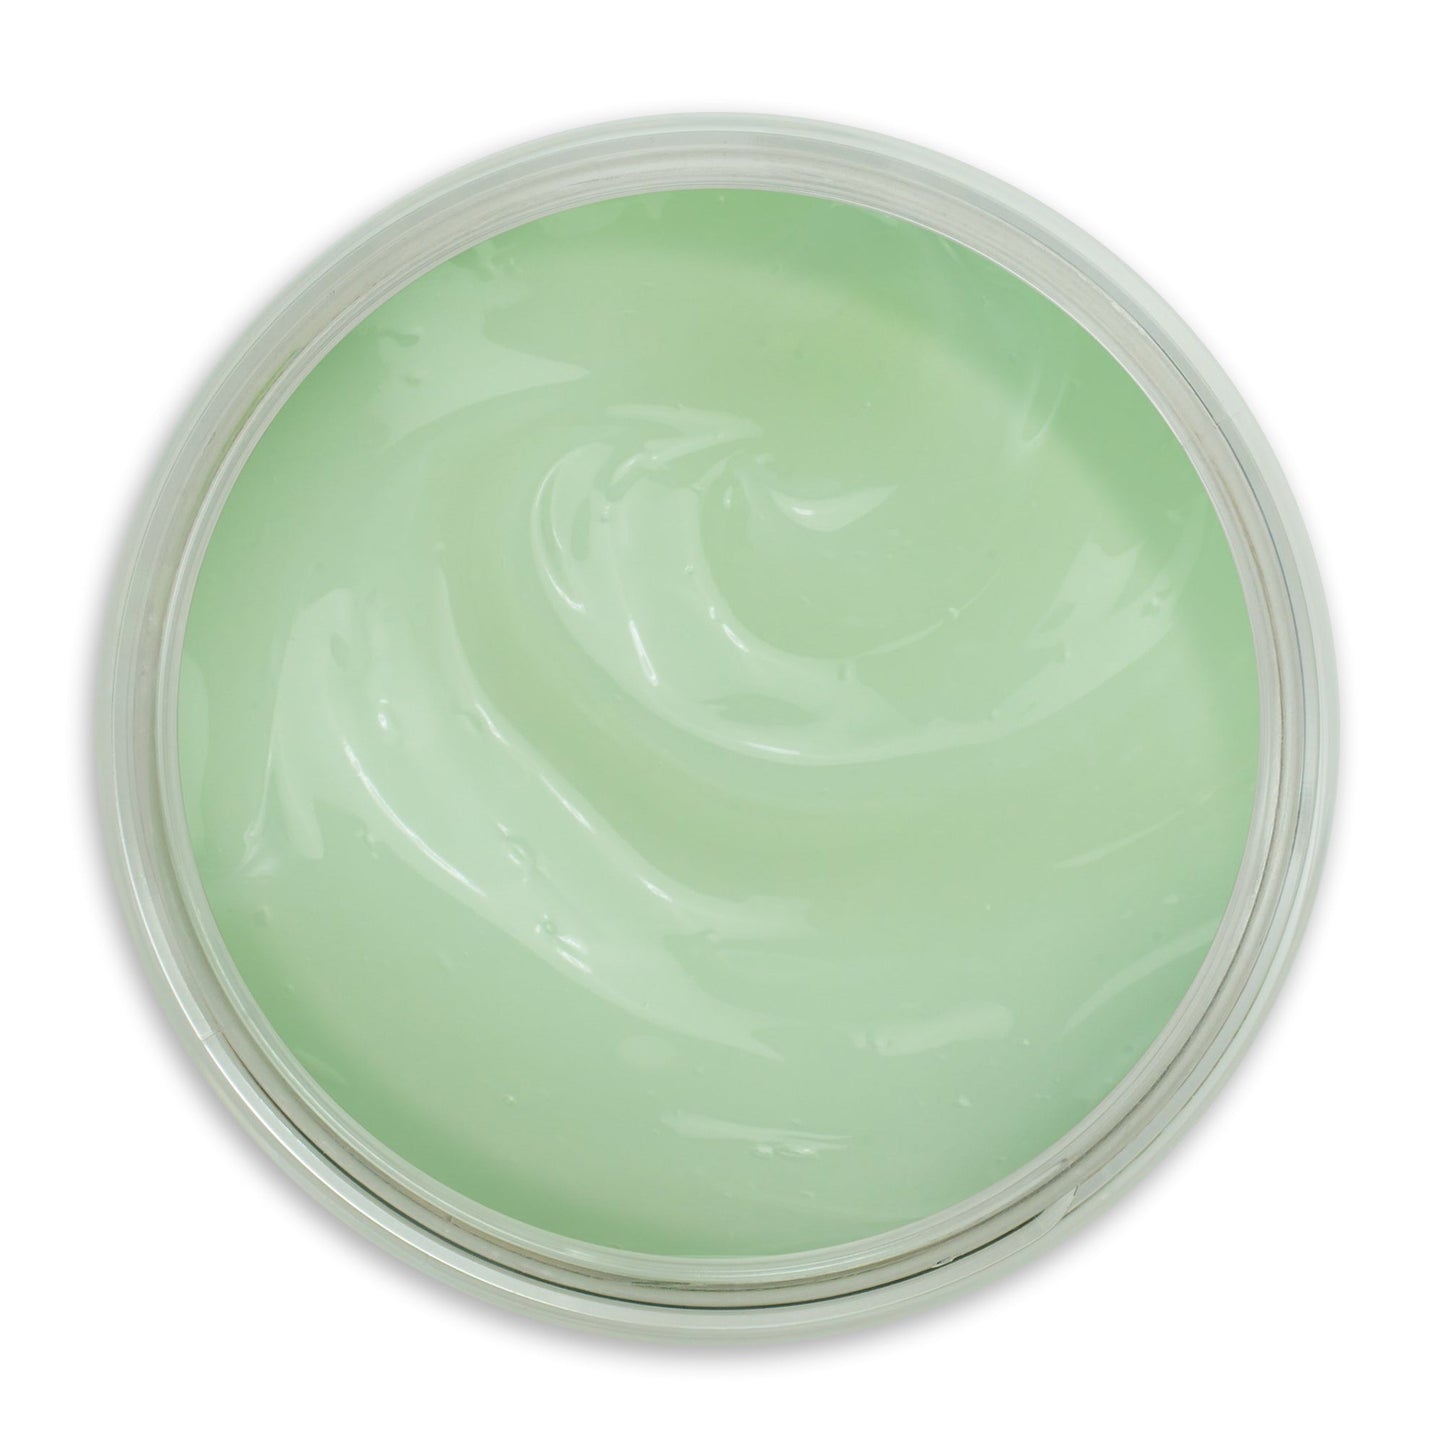 Super Greens Nourishing Night Gel Cream by EarthToSkin